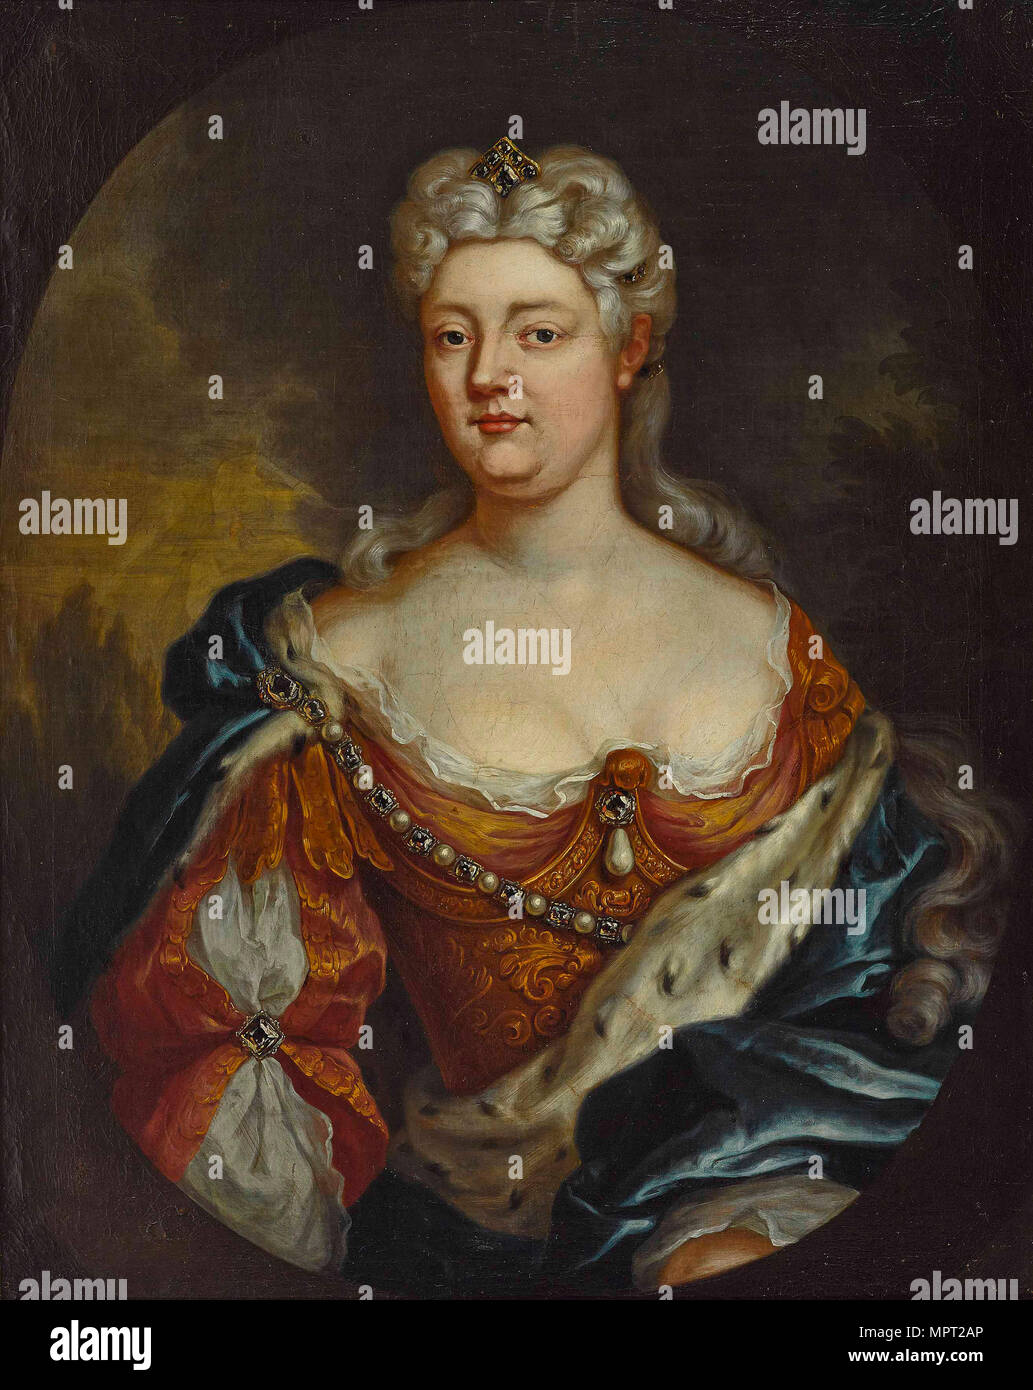 Countess Palatine Caroline of Nassau-Saarbrücken (1704-1774), c. 1725. Stock Photo